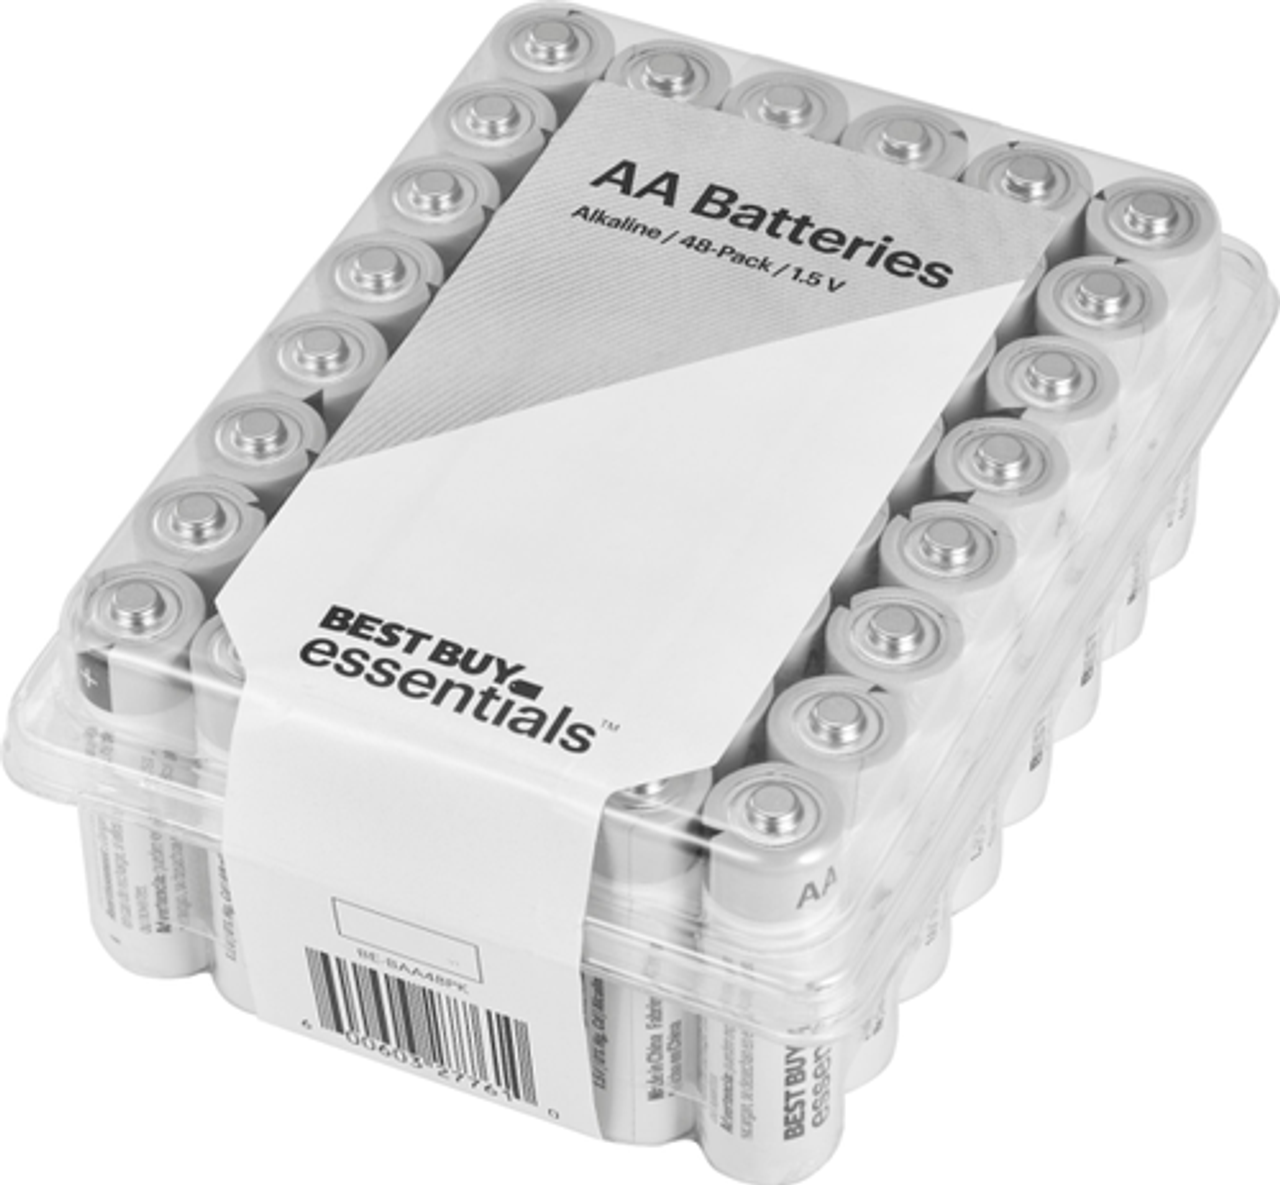 Best Buy essentials™ - AA Batteries (48-Pack)